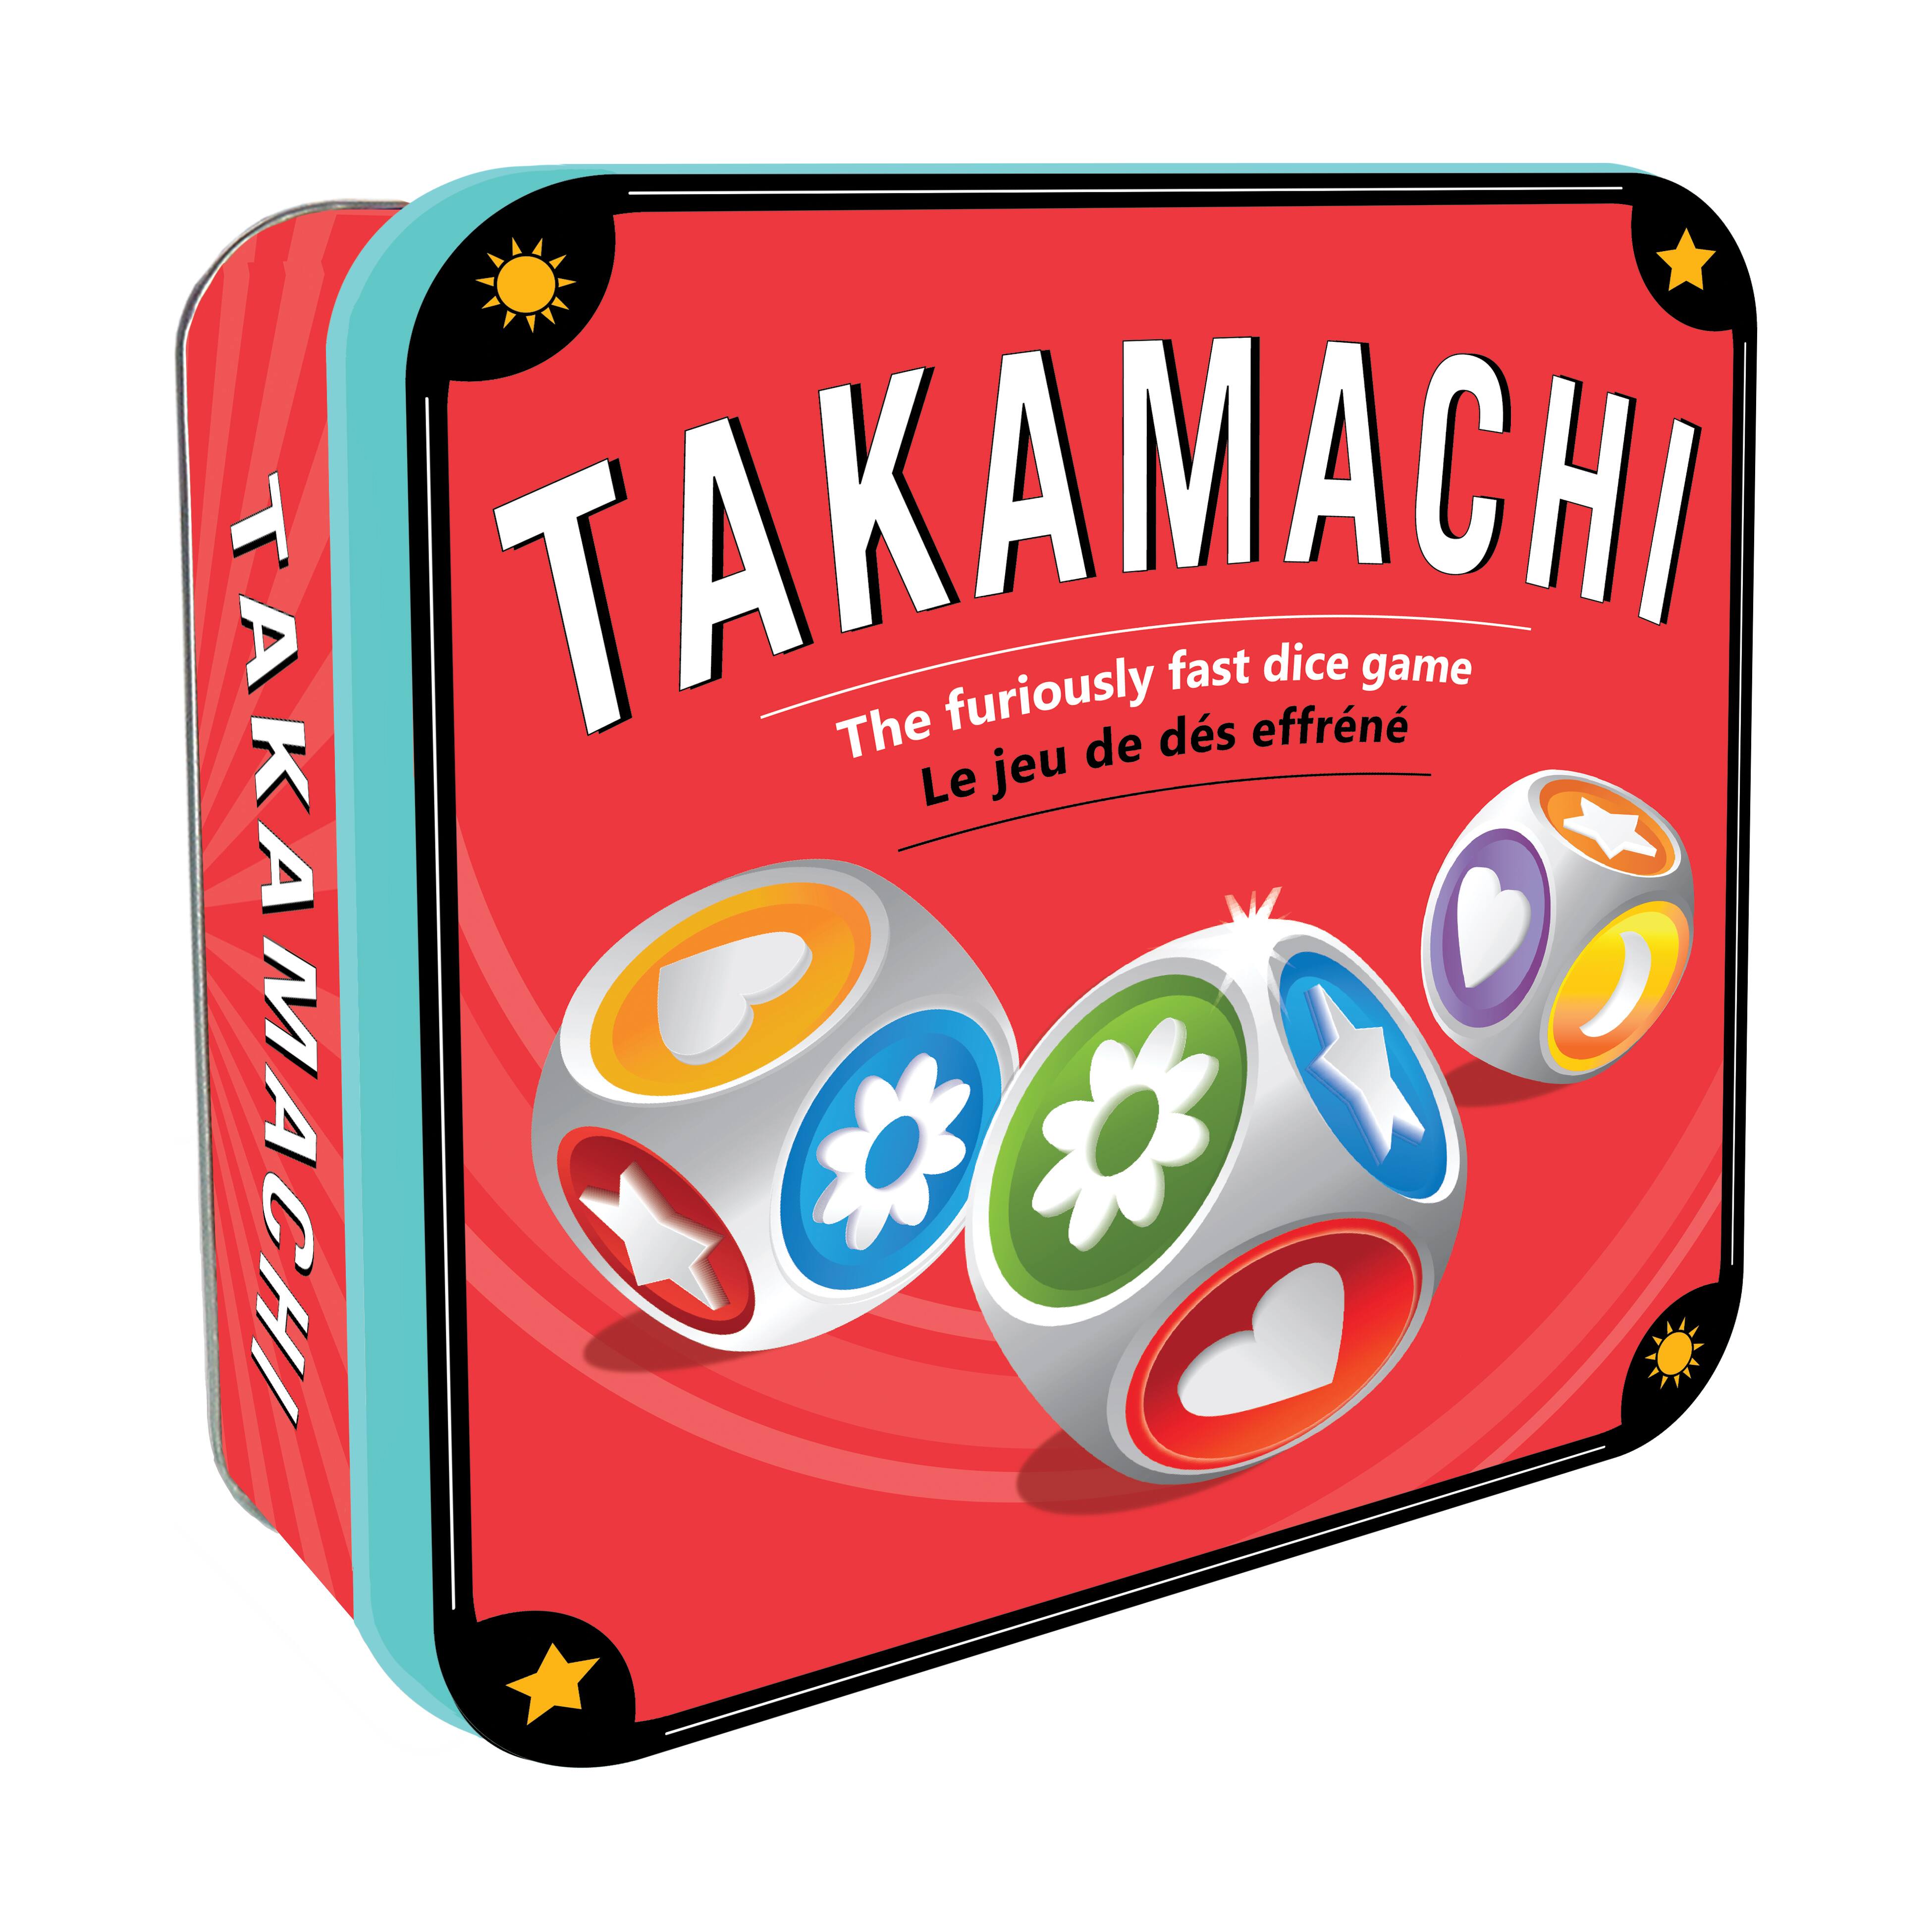 Takamachi Dice Game